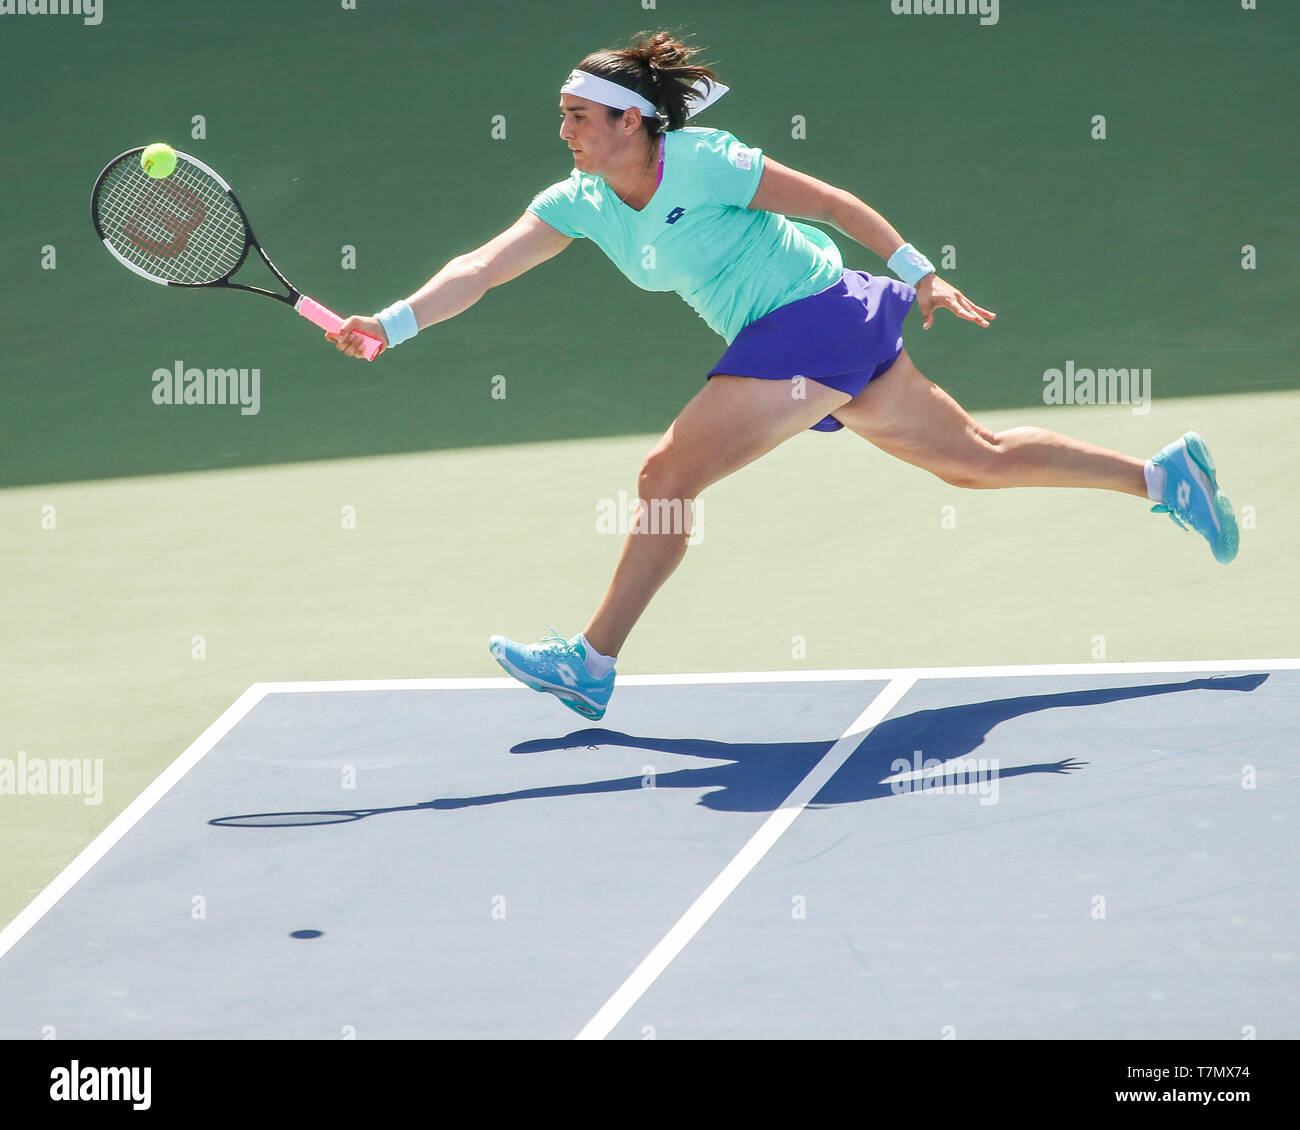 Tunisian  tennis player Ons Jabeurplaying forehand shot during Dubai Tennis Championships 2019, Dubai, United Arab Emirates Stock Photo